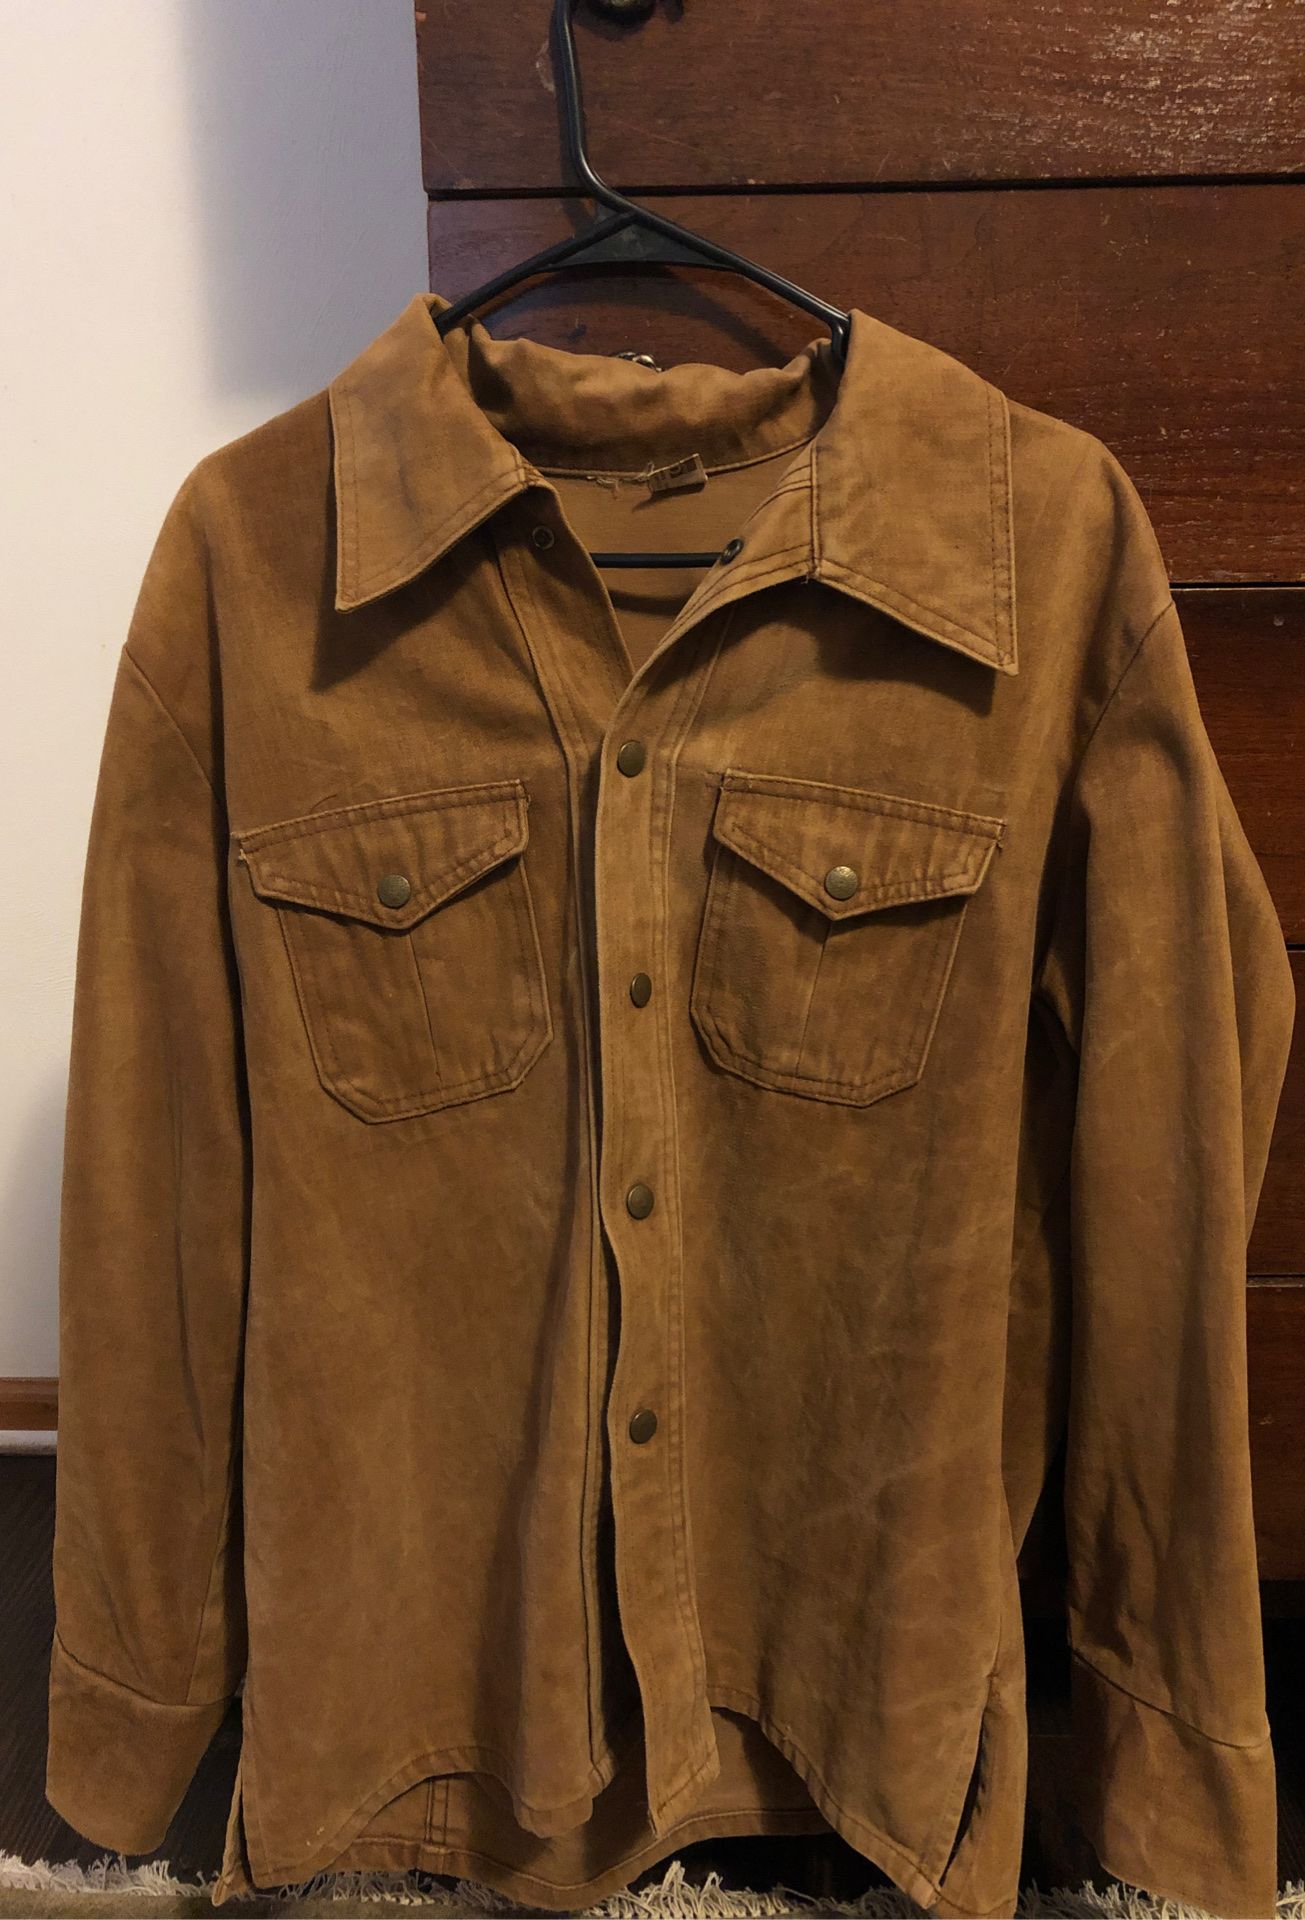 Vintage Montgomery ward suede ish button up western shirt/ jacket.